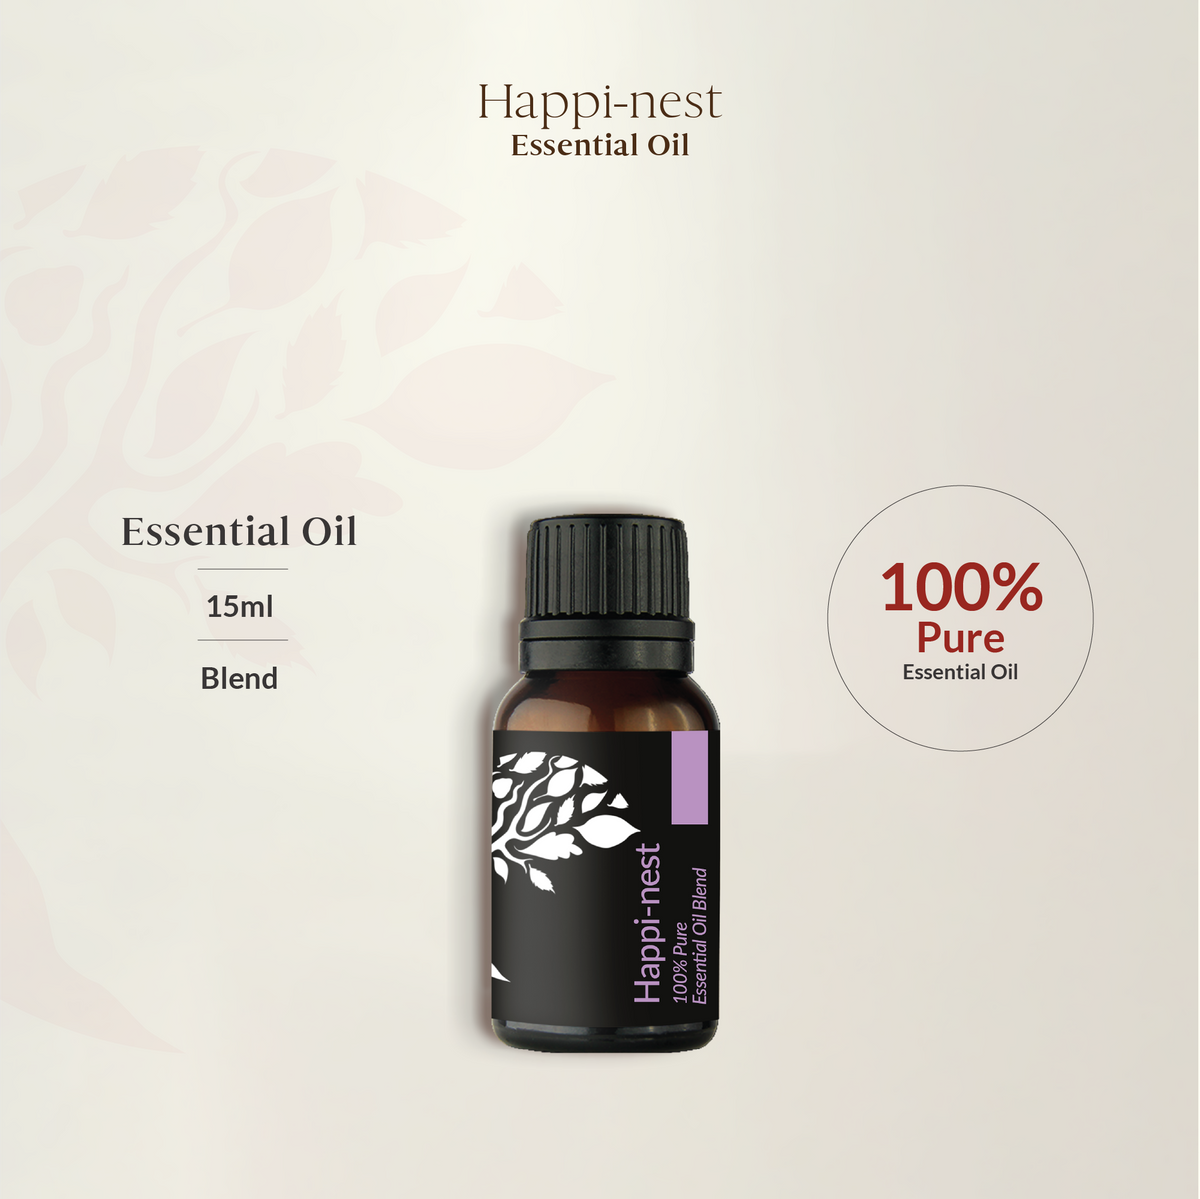 Happi-nest Essential Oil Blend